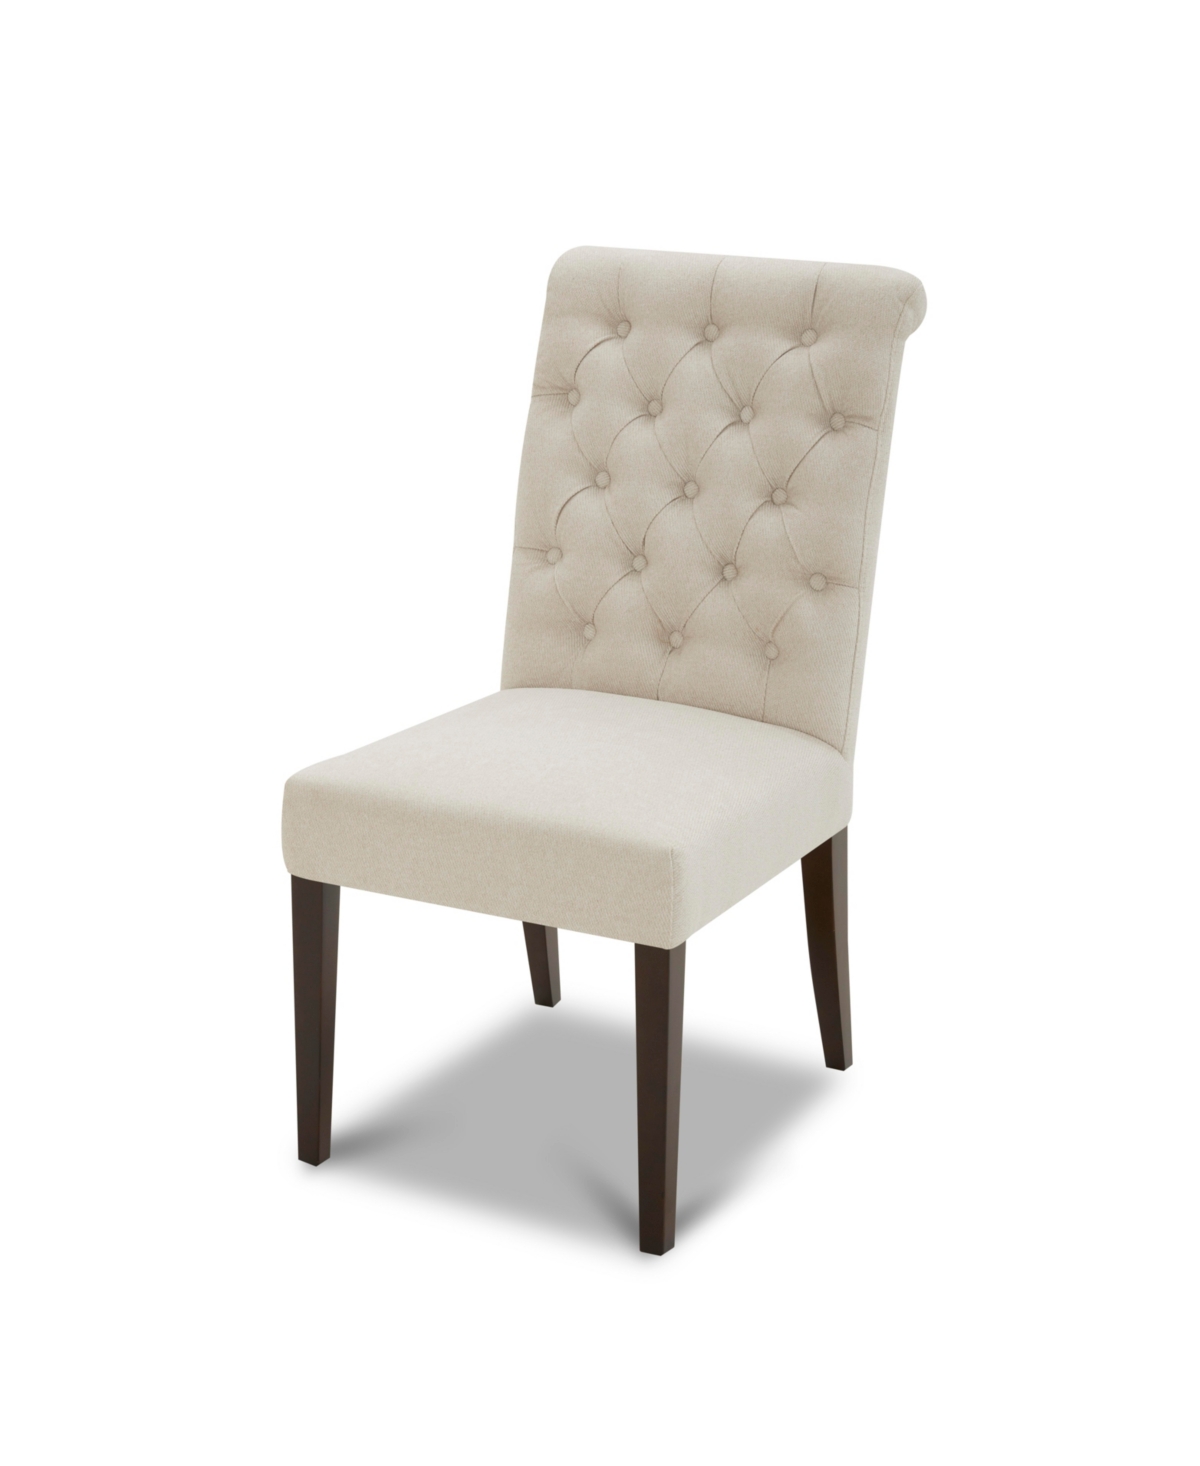 Alizon Dining Chair, Created for Macys